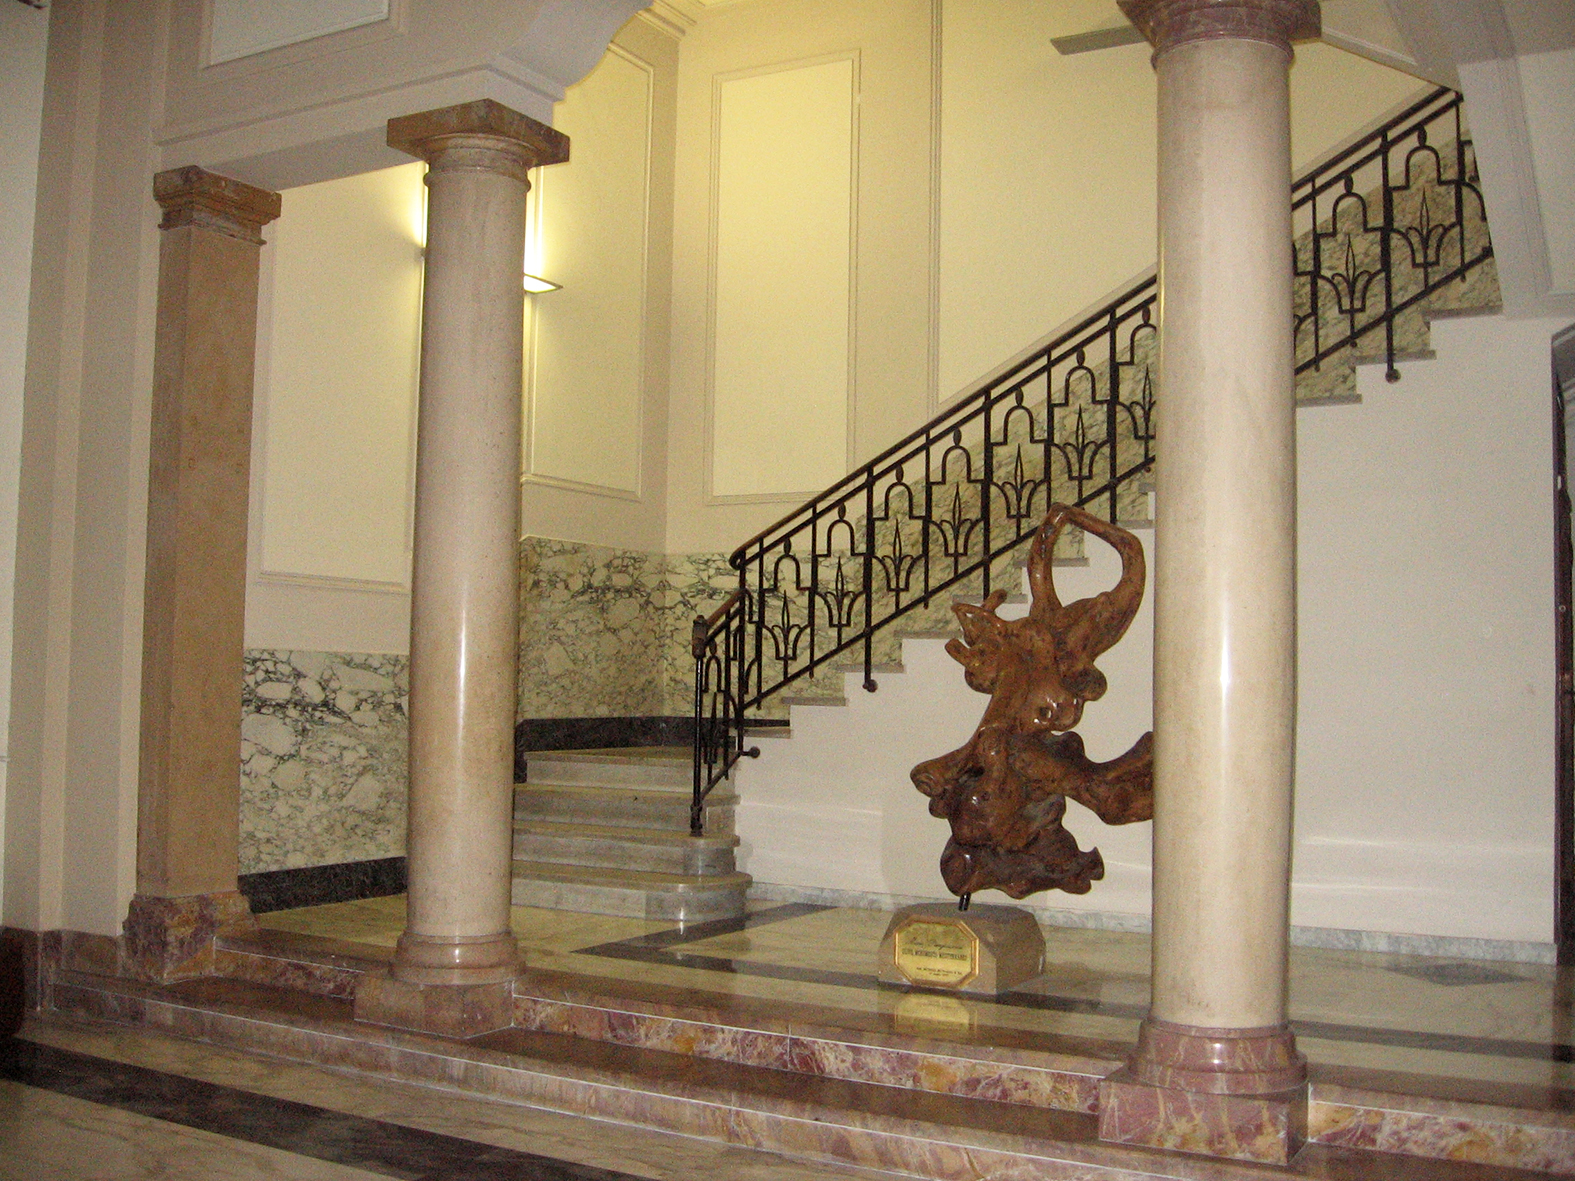 Pinacoteca Provinciale Giaquinto (pinacoteca, pubblica) - Bari (BA) 